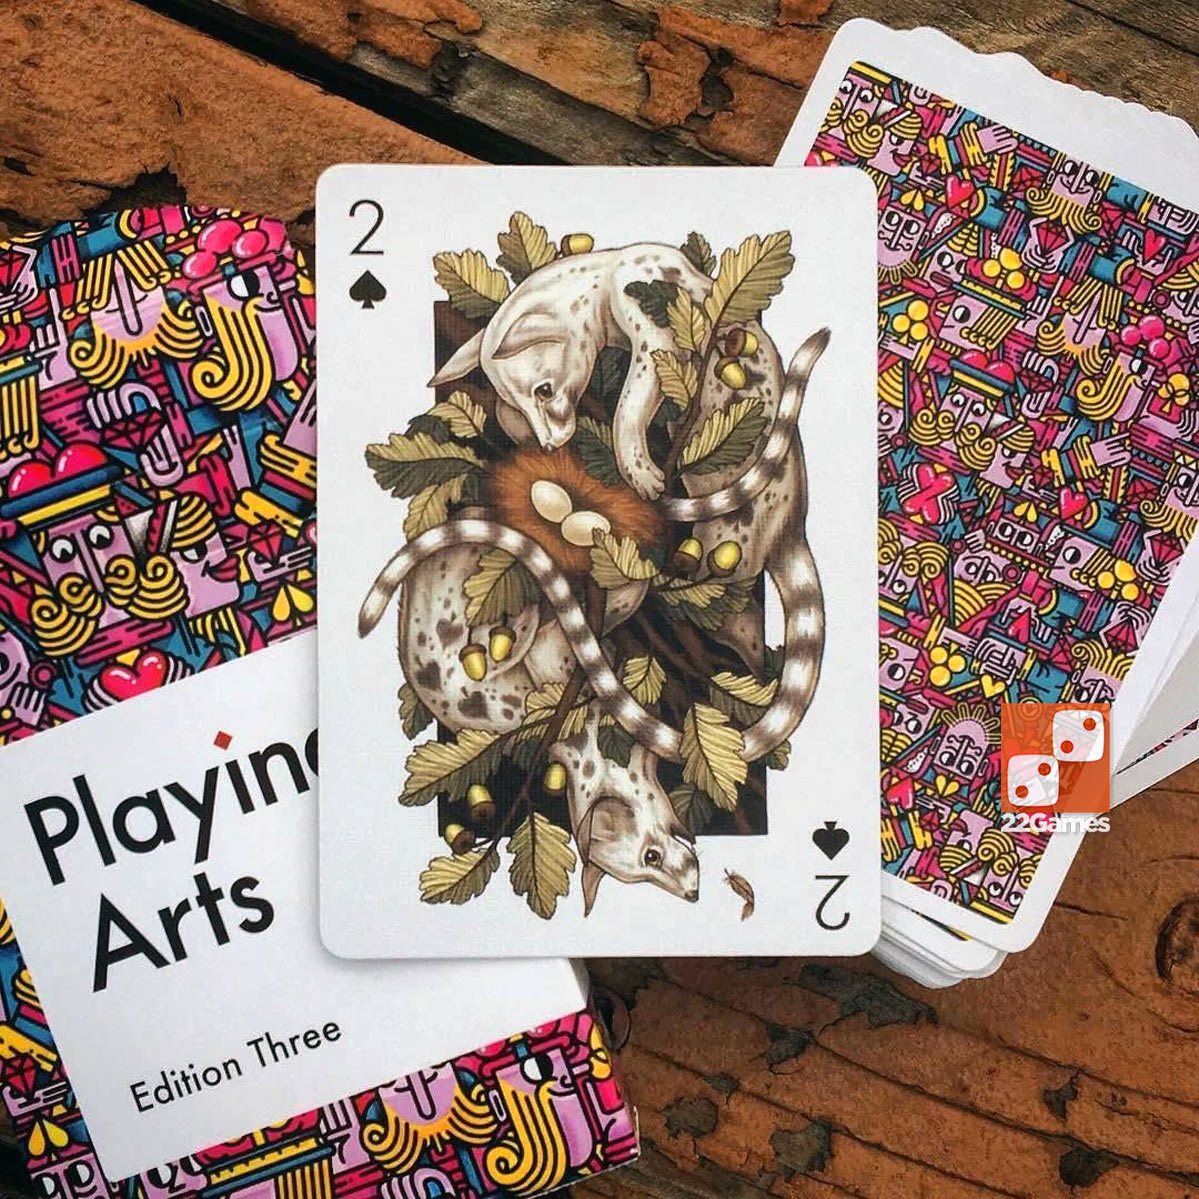 Playing Arts Edition Three